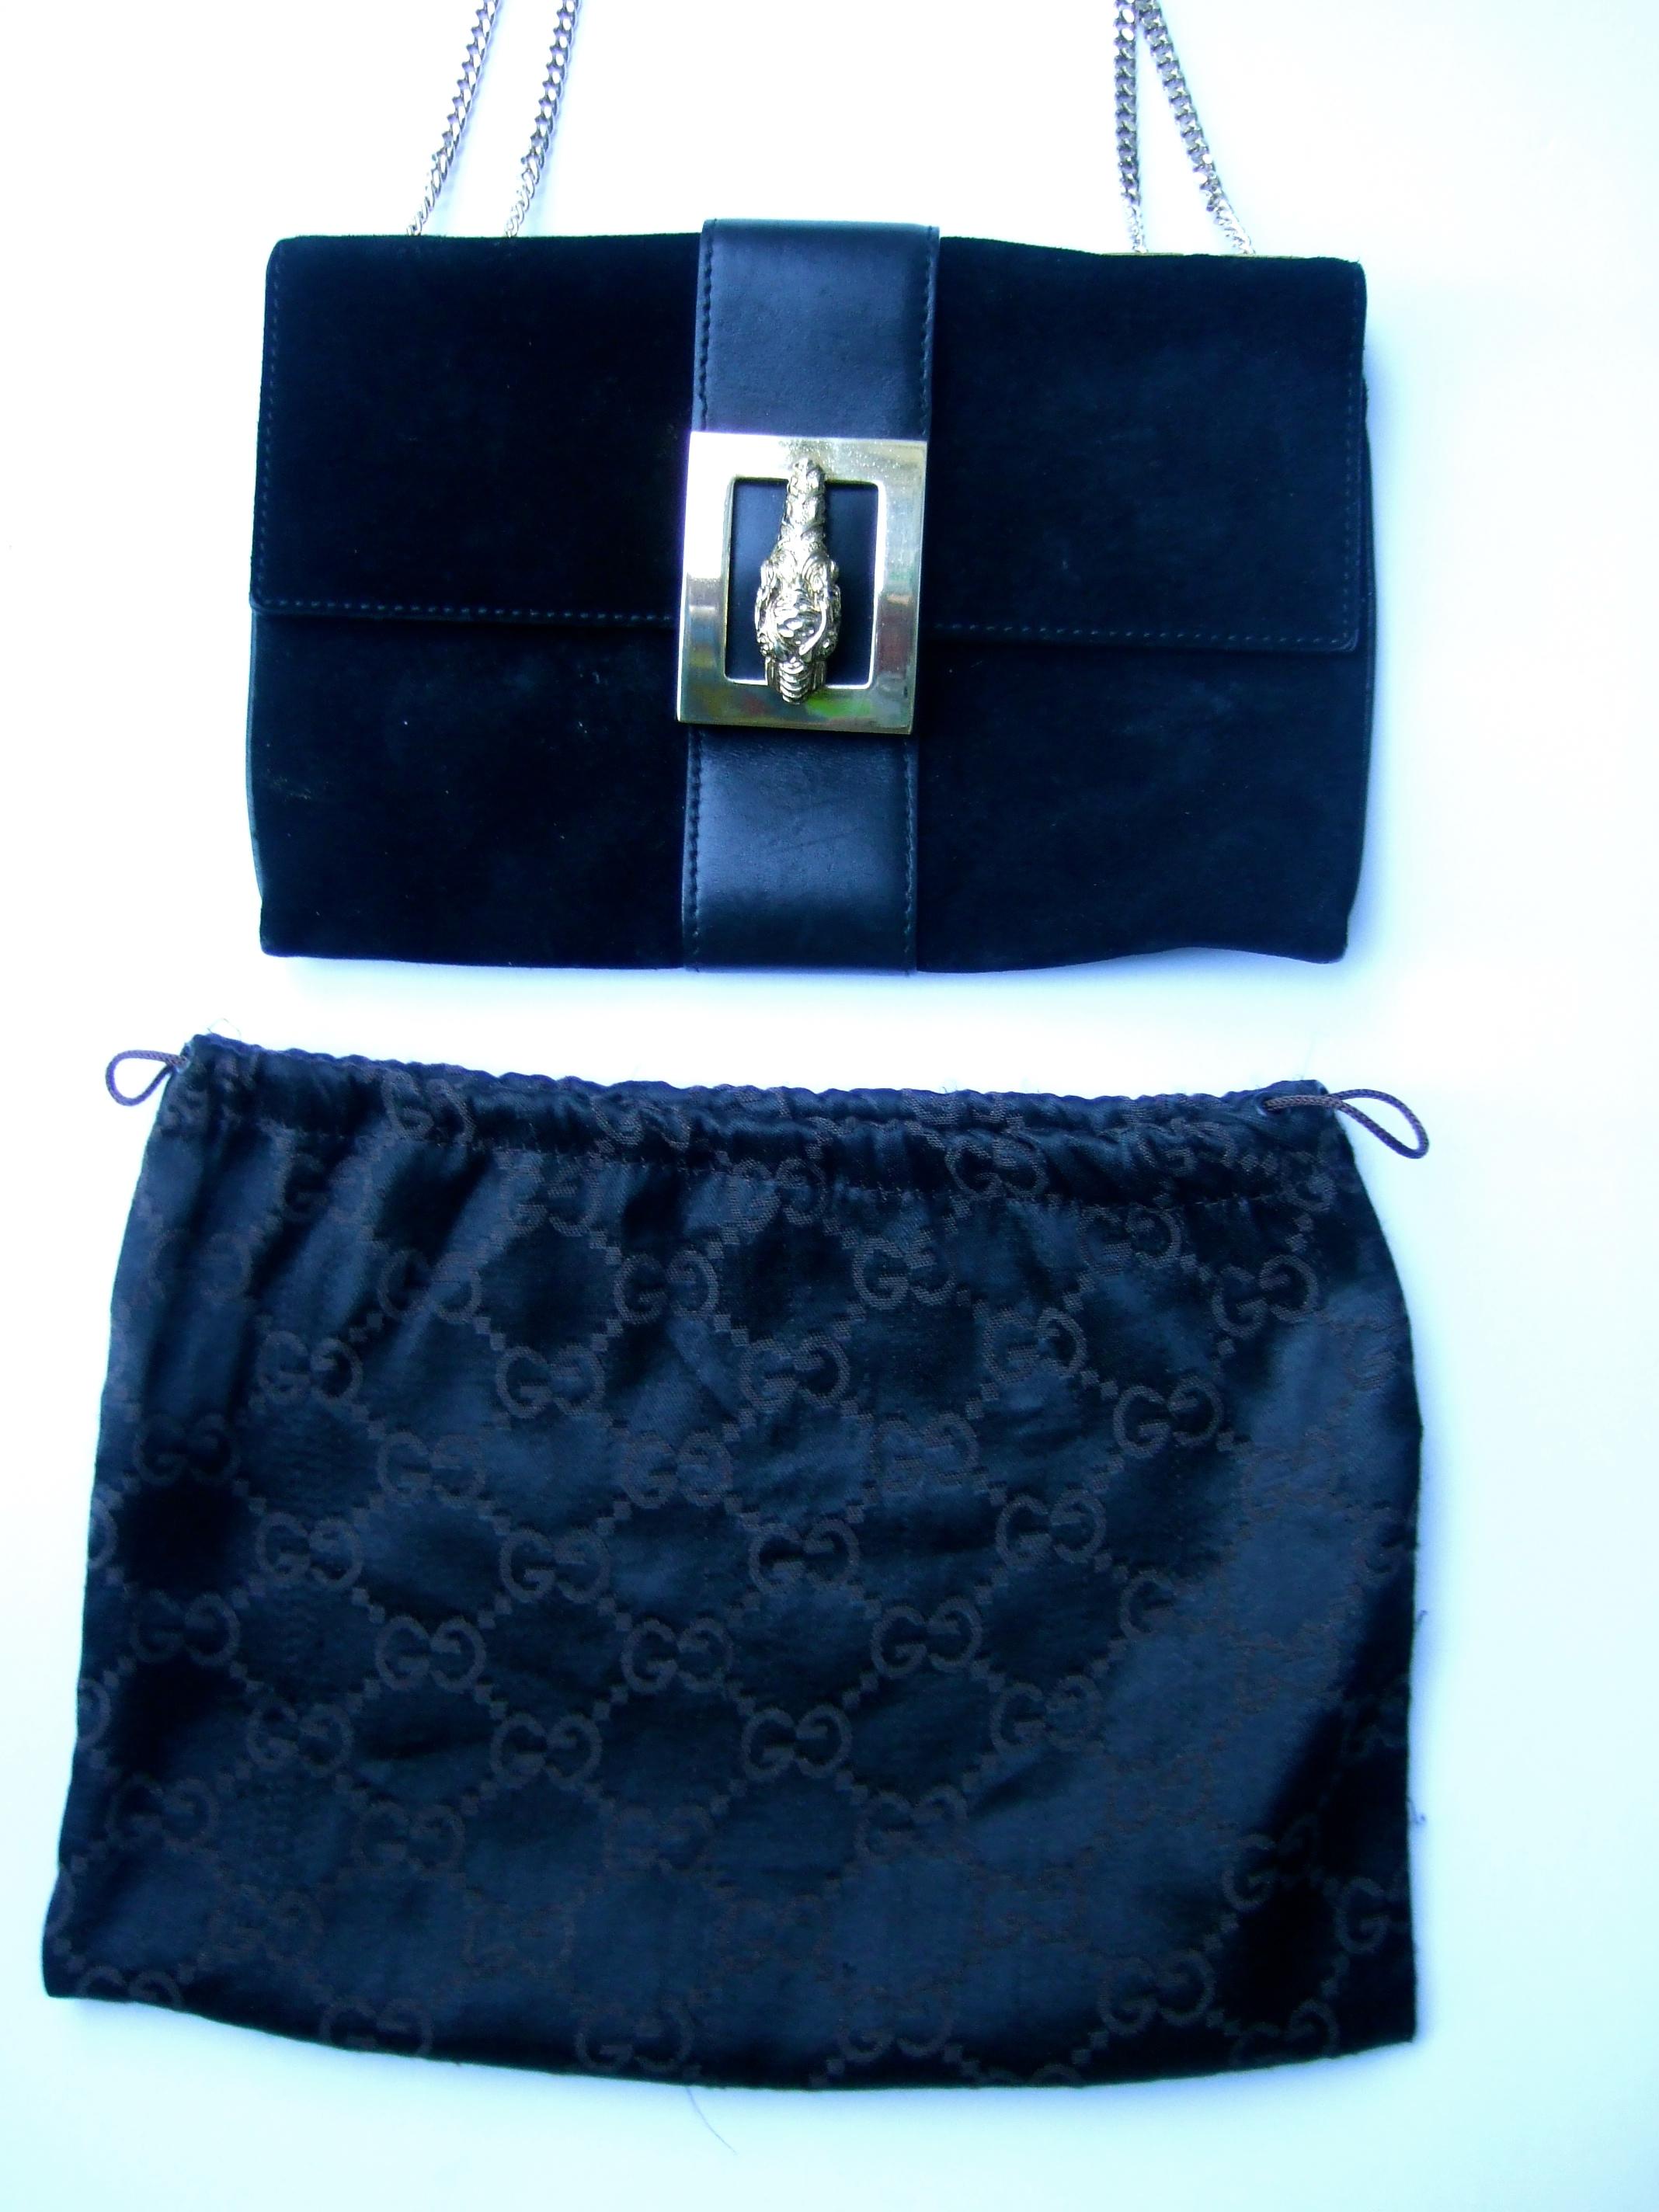 Gucci Italy Rare Black Suede Tiger Emblem Handbag Tom Ford Design c 1990s  For Sale 9